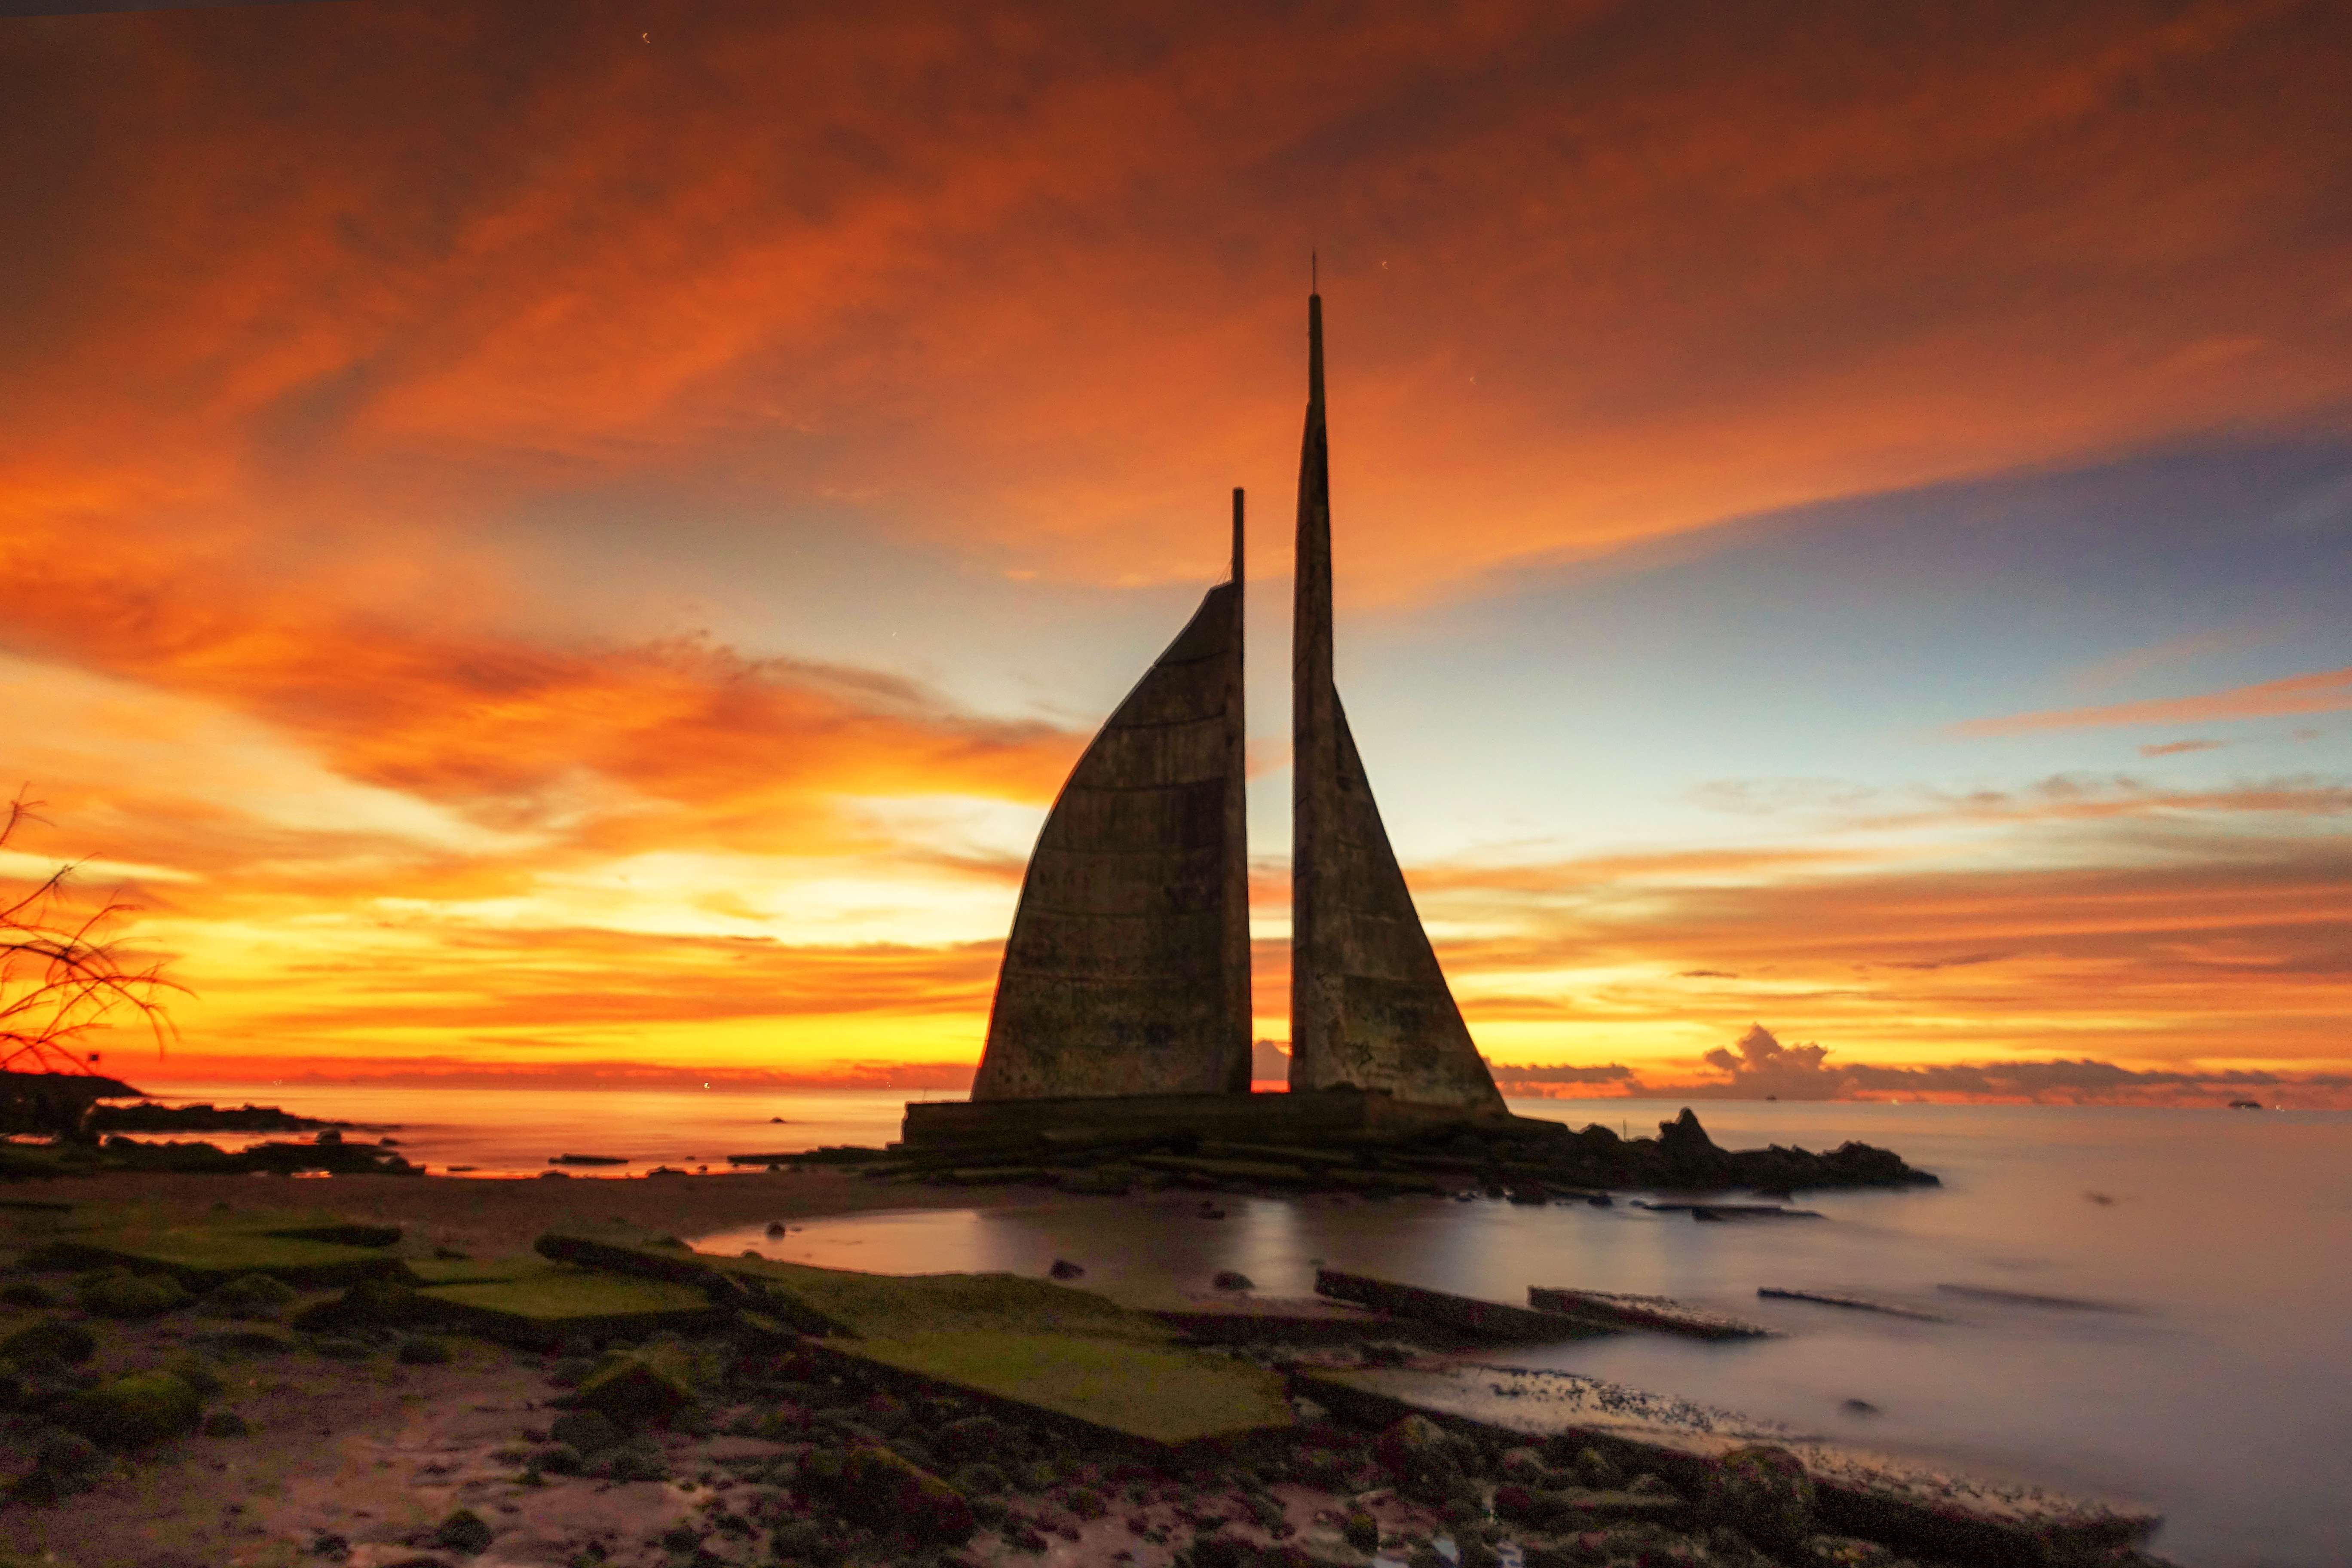 Pecinta Senja Inilah Spot Sunset Makassar Yang Wajib Dikunjungi